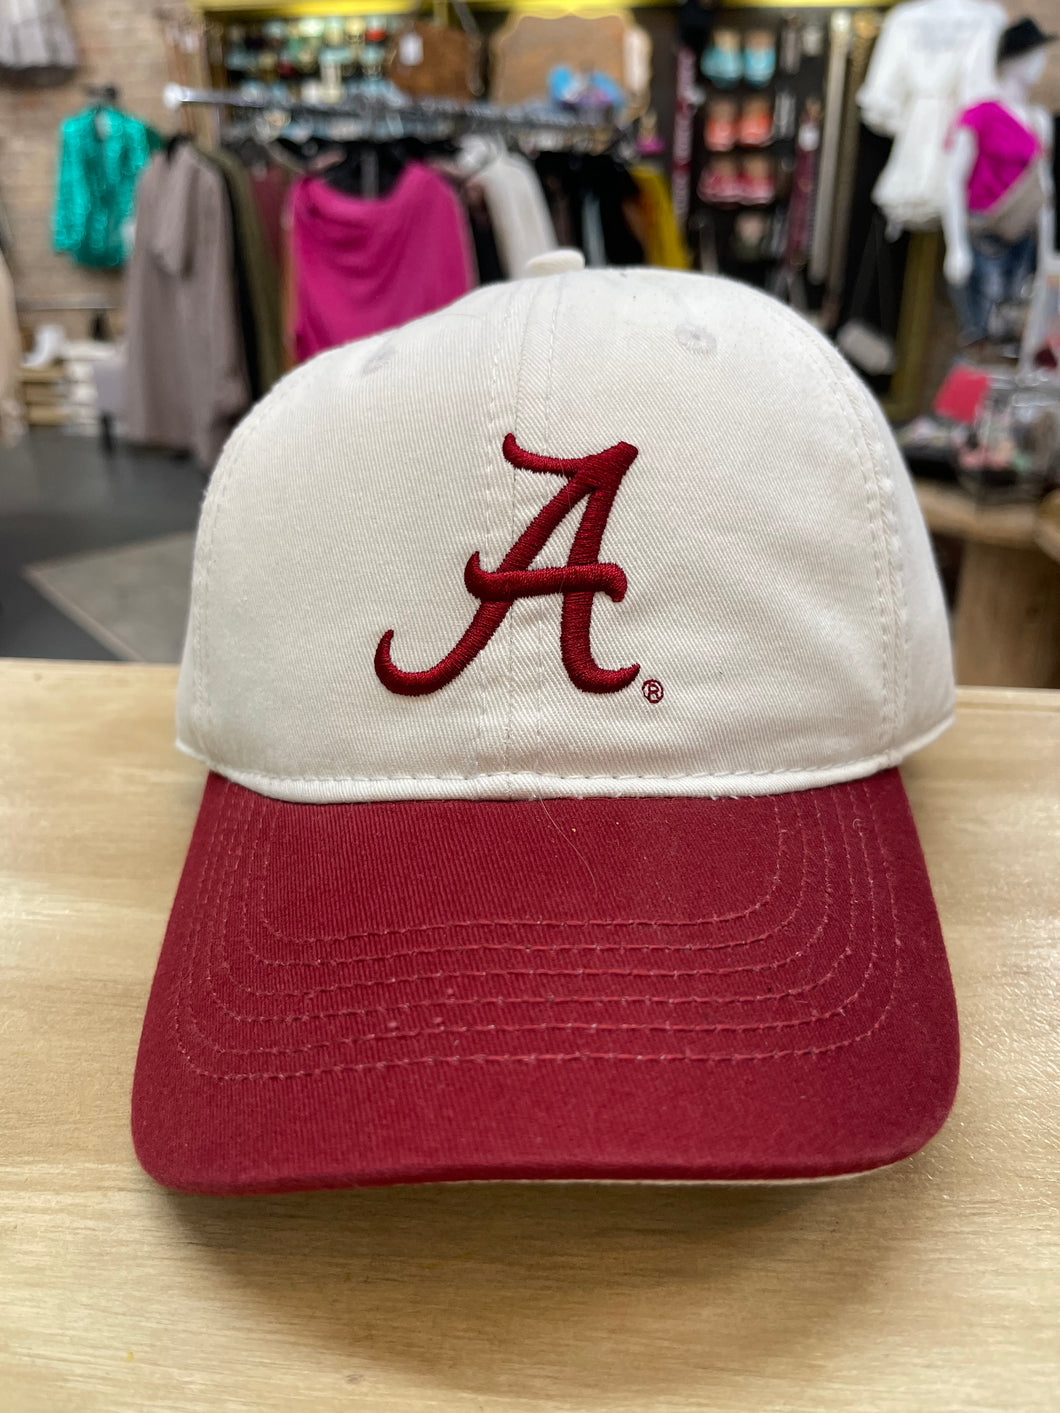 Alabama Hats